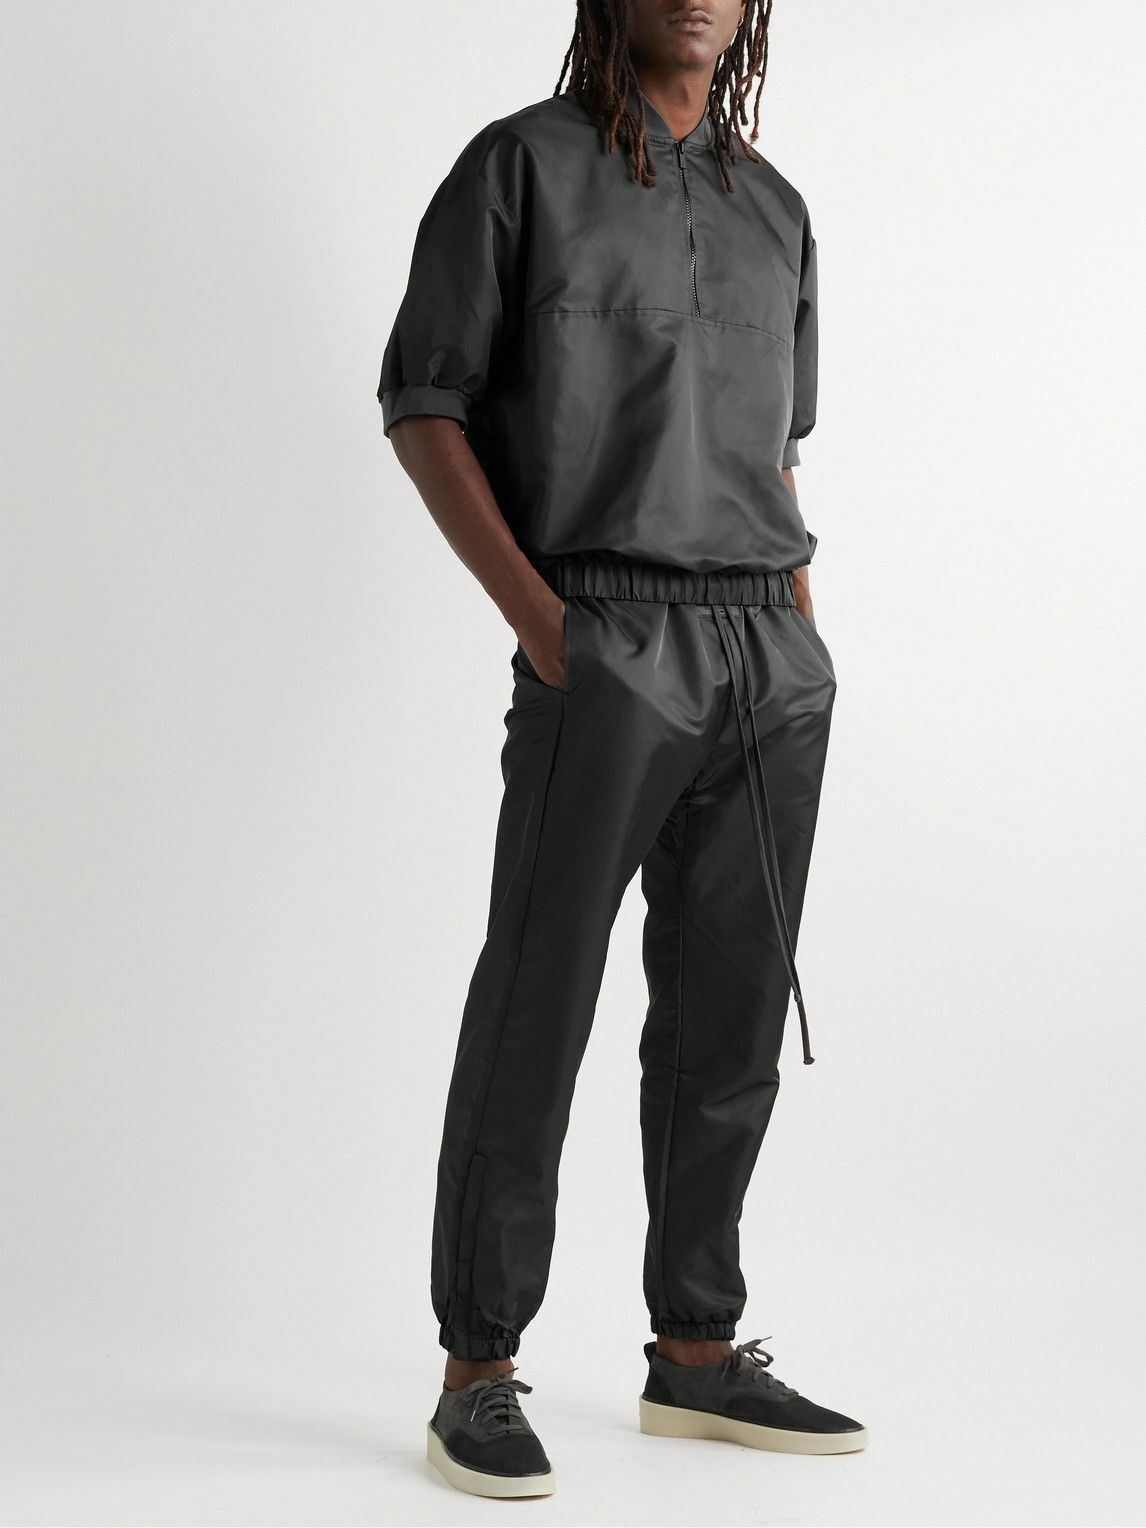 Buy VH FLEX Black Solid Nylon Regular Fit Men's Track Pants | Shoppers Stop